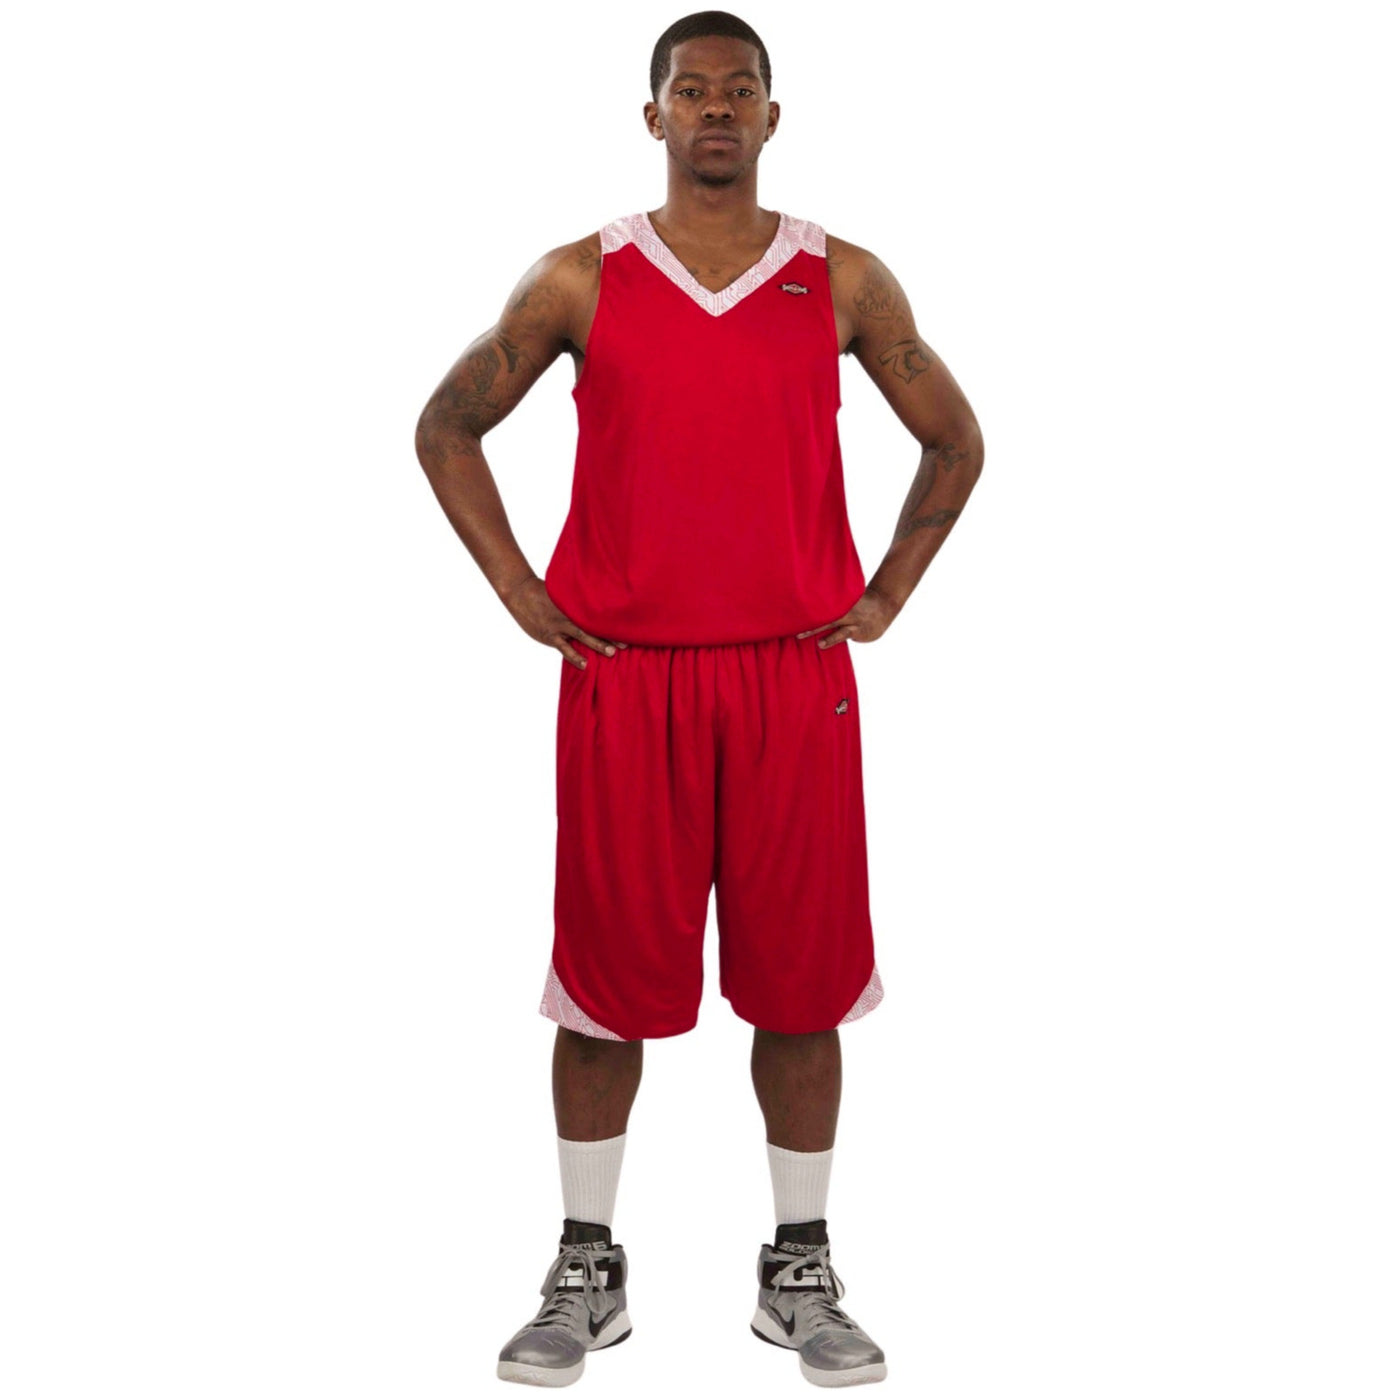 Shirts & Skins Phenom Reversible Basketball Uniform